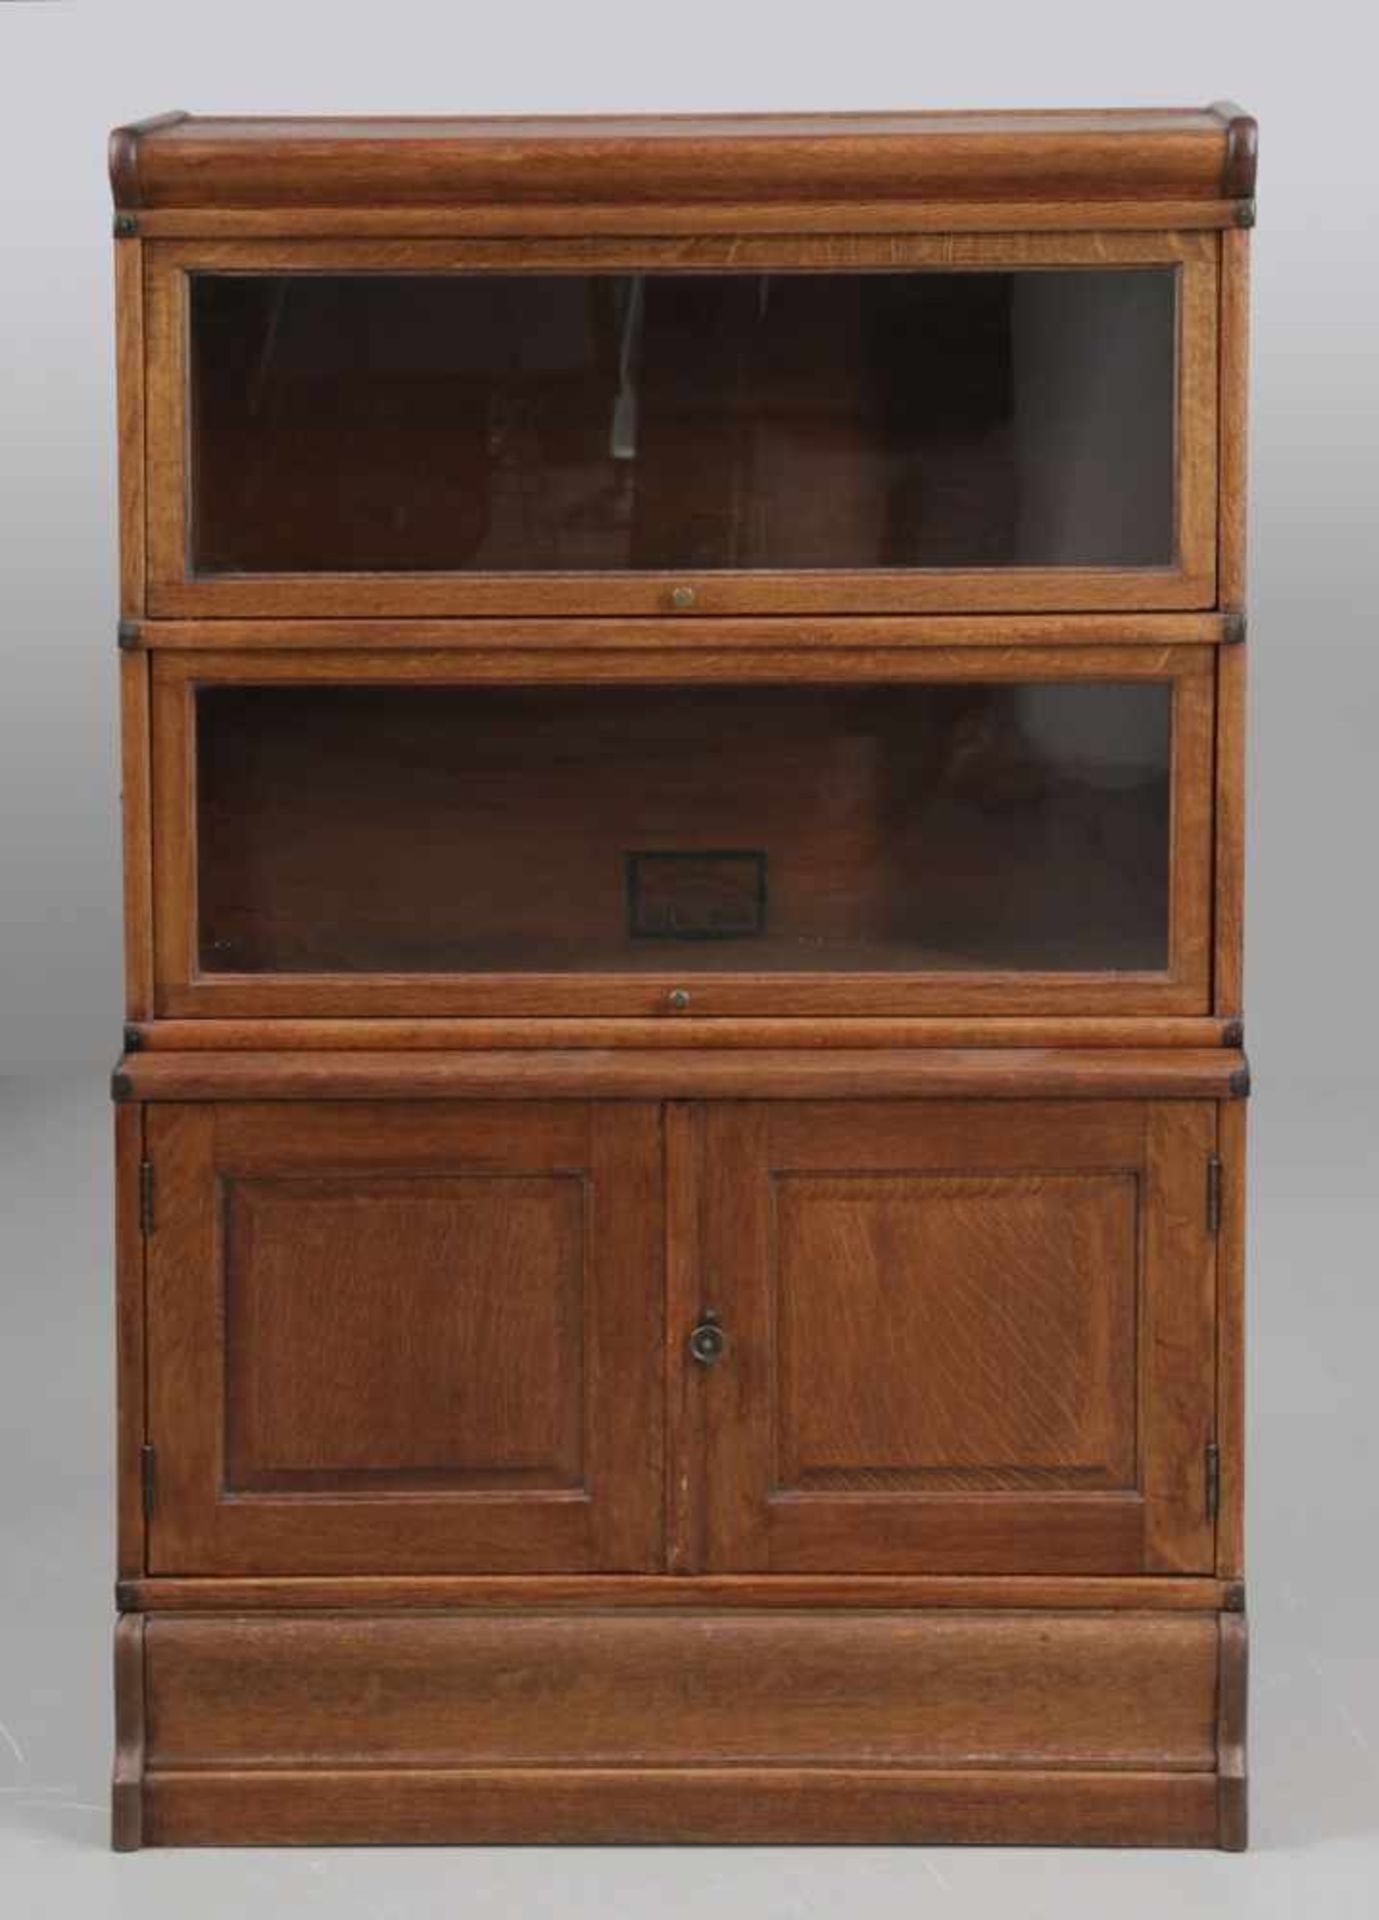 Bücherregal / Book Case Globe Wernicke/Cincinnati/USA. Eiche. 130 x 86,5 x 38,5 cm. Firmen